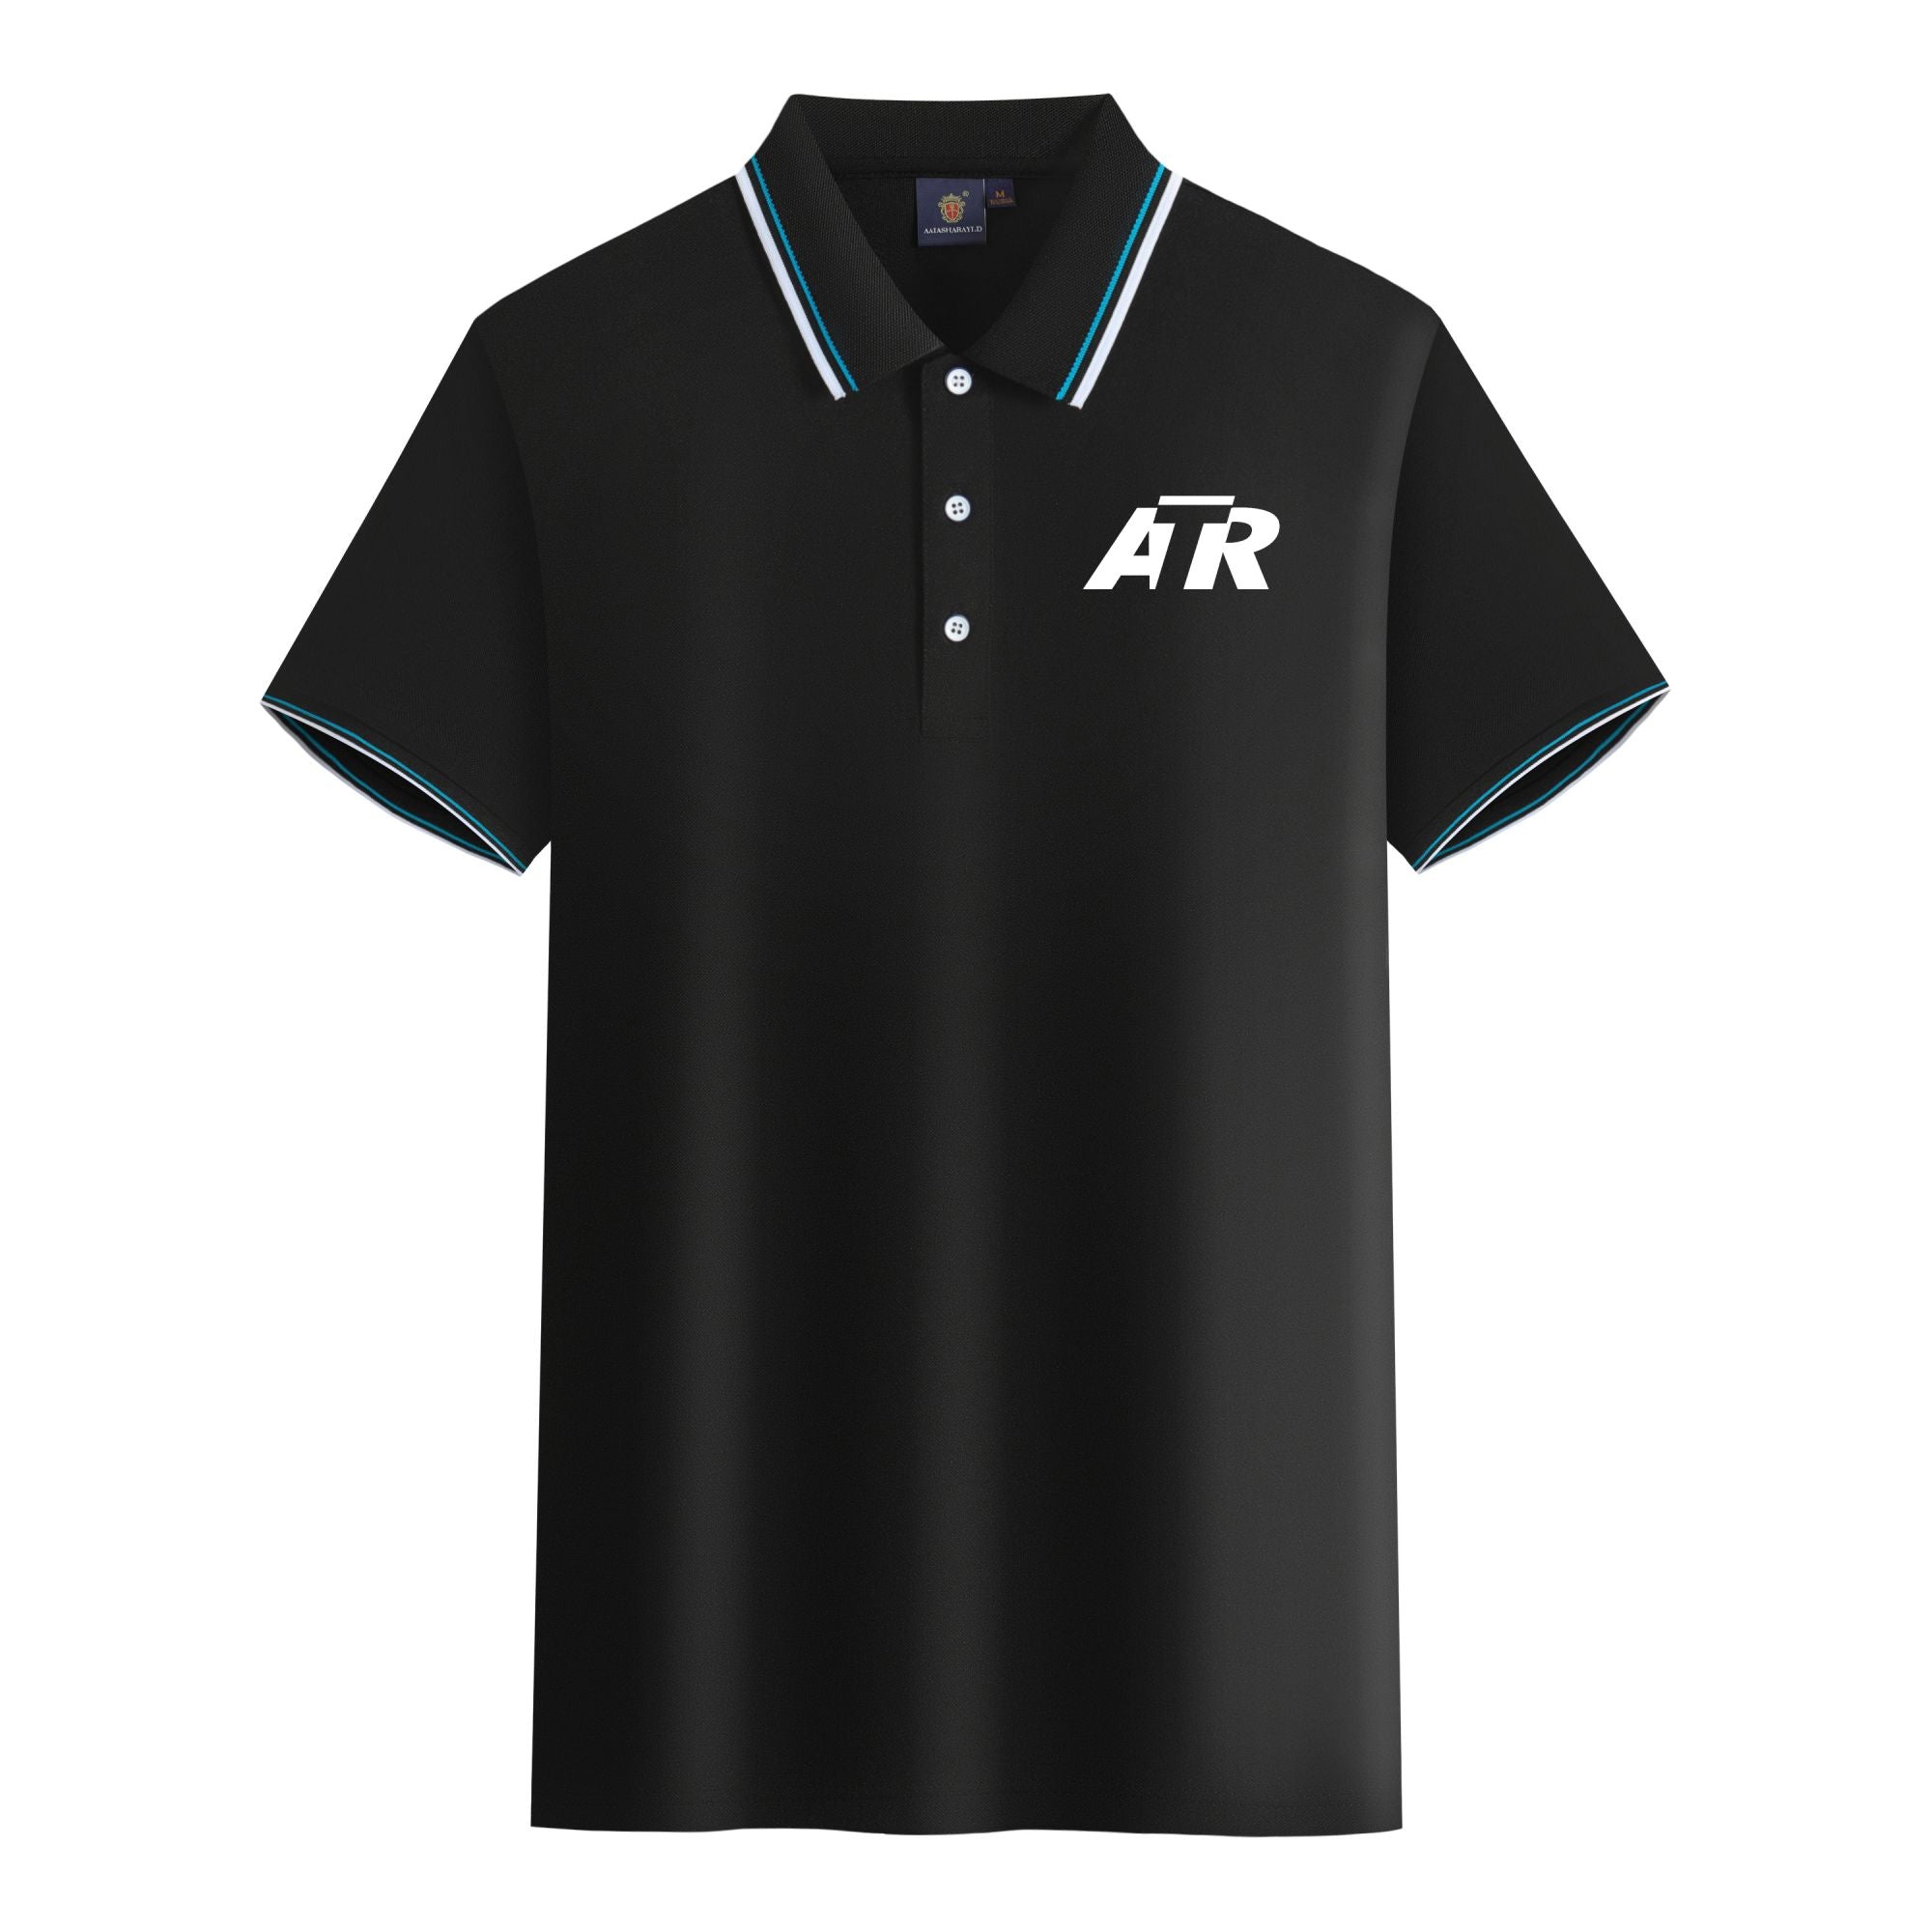 ATR & Text Designed Stylish Polo T-Shirts